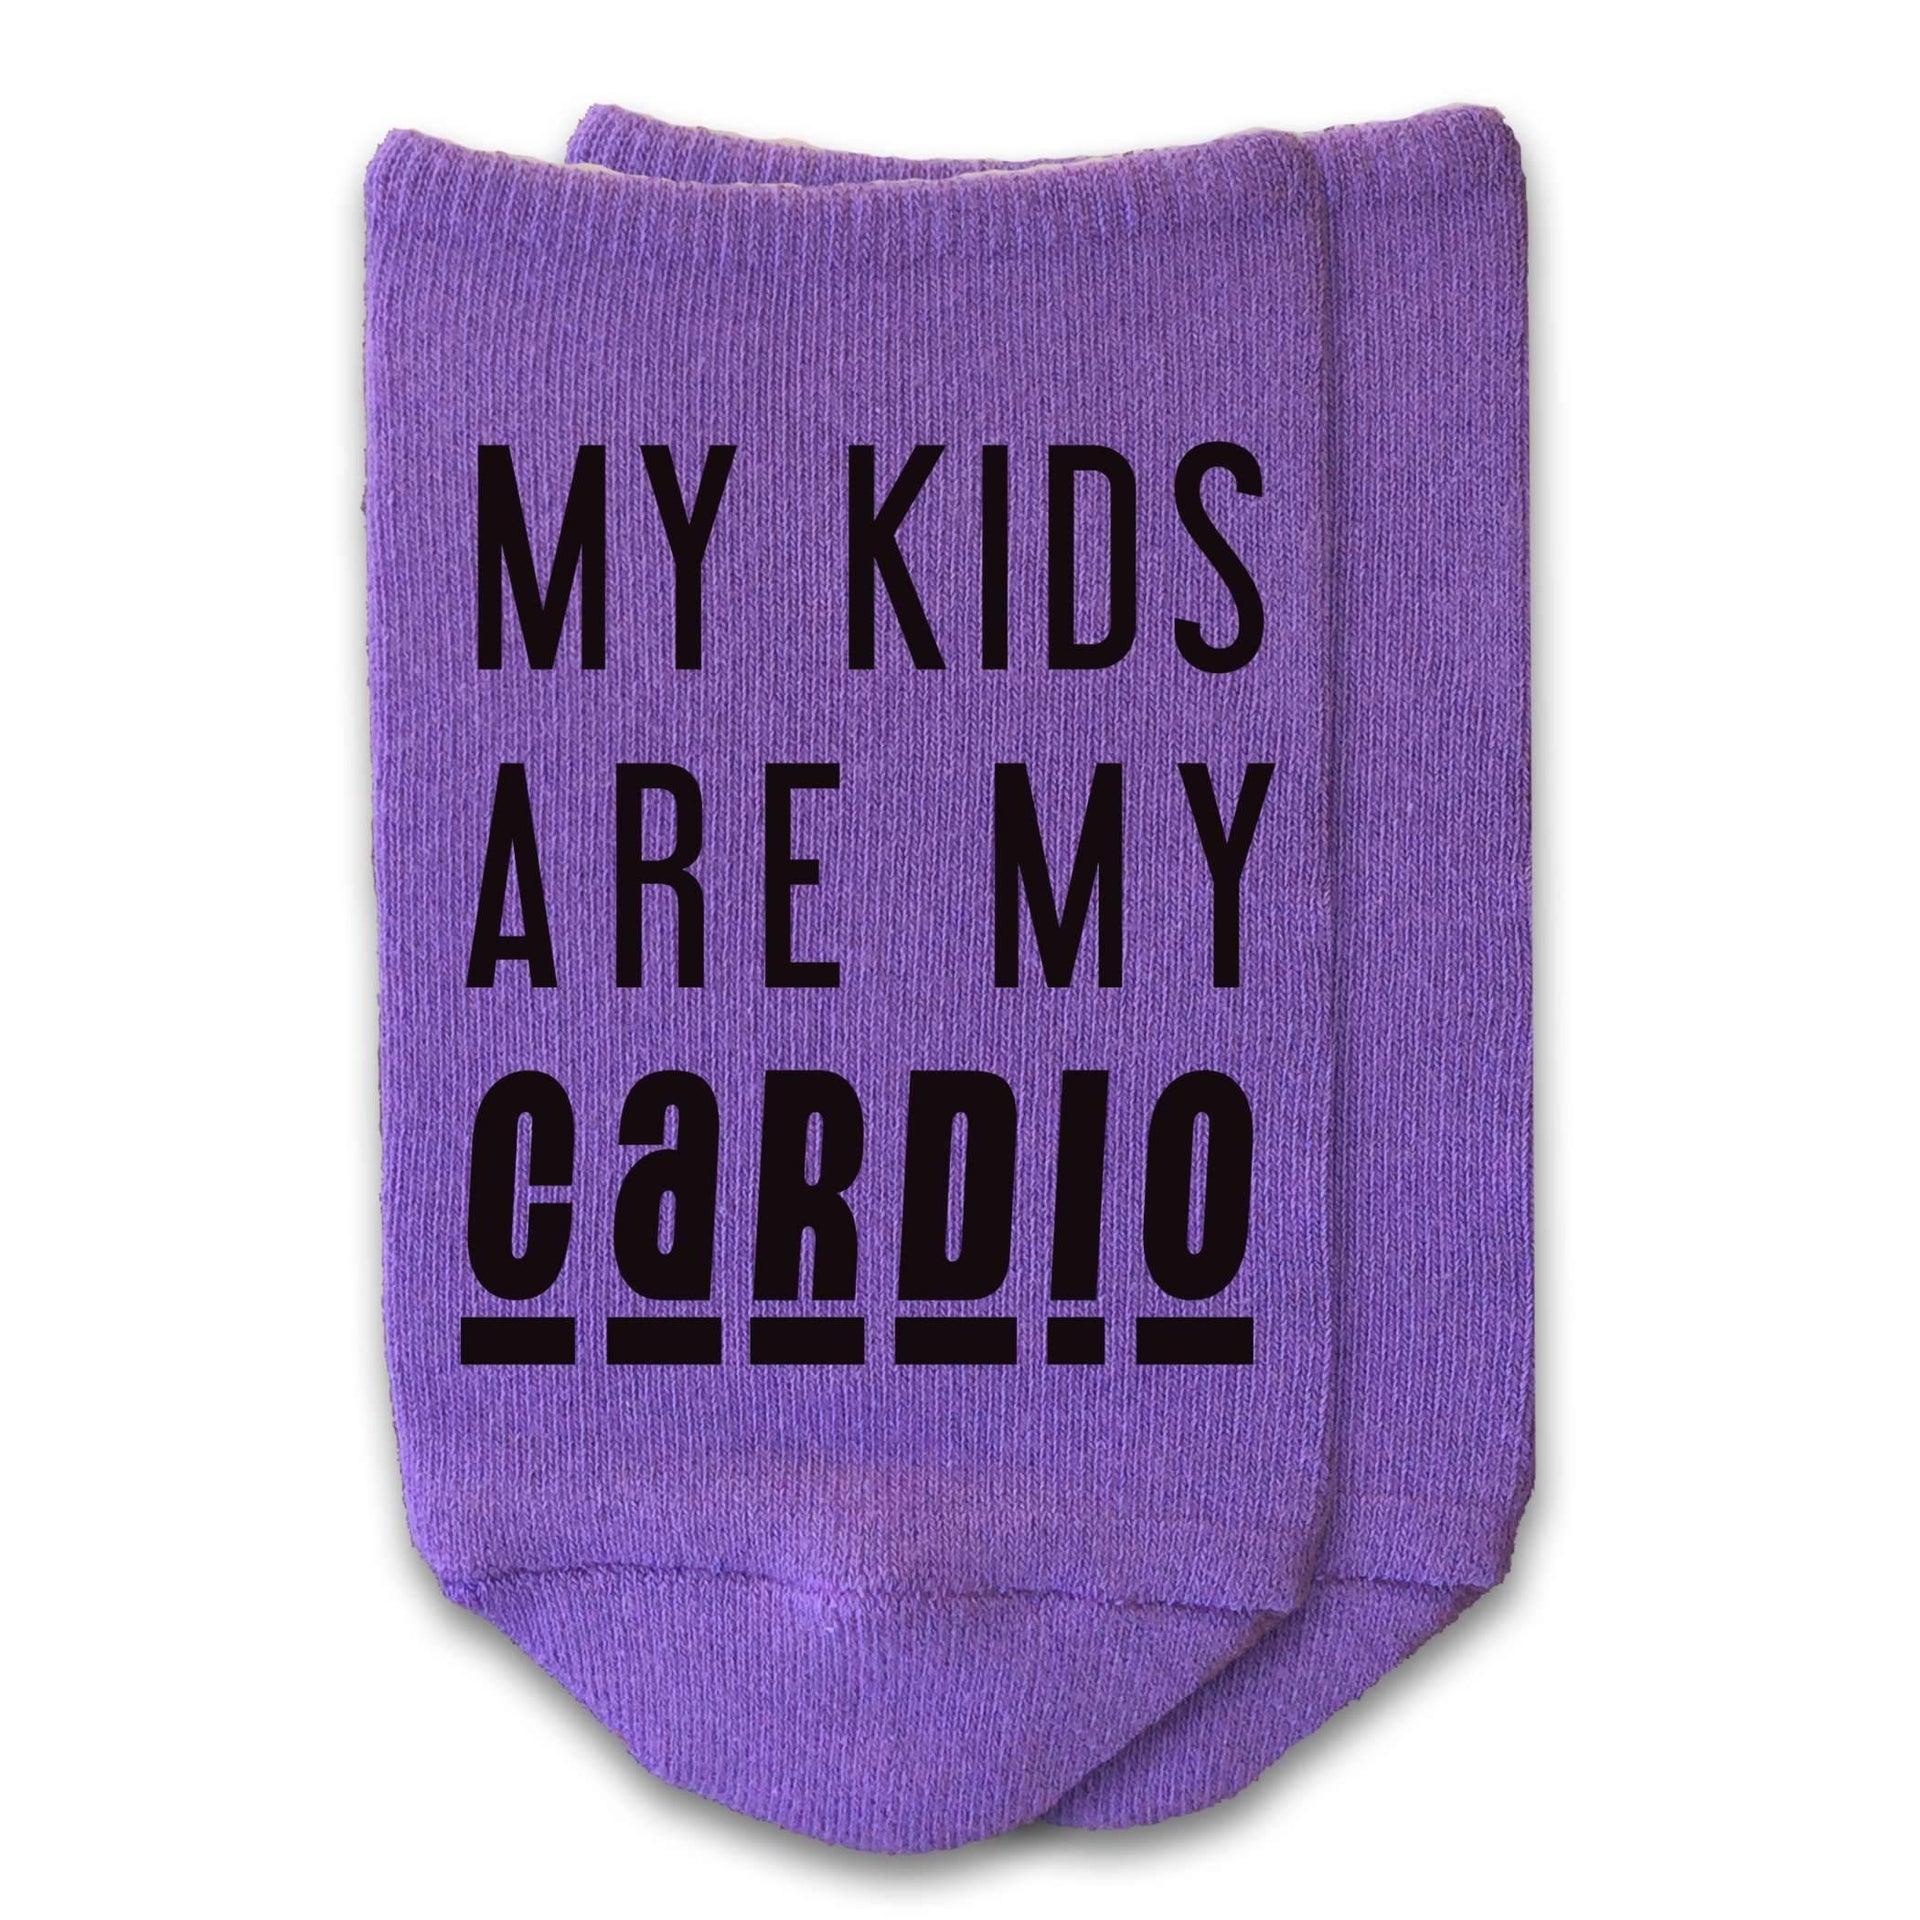 My kids are my cardio custom printed on no show socks.